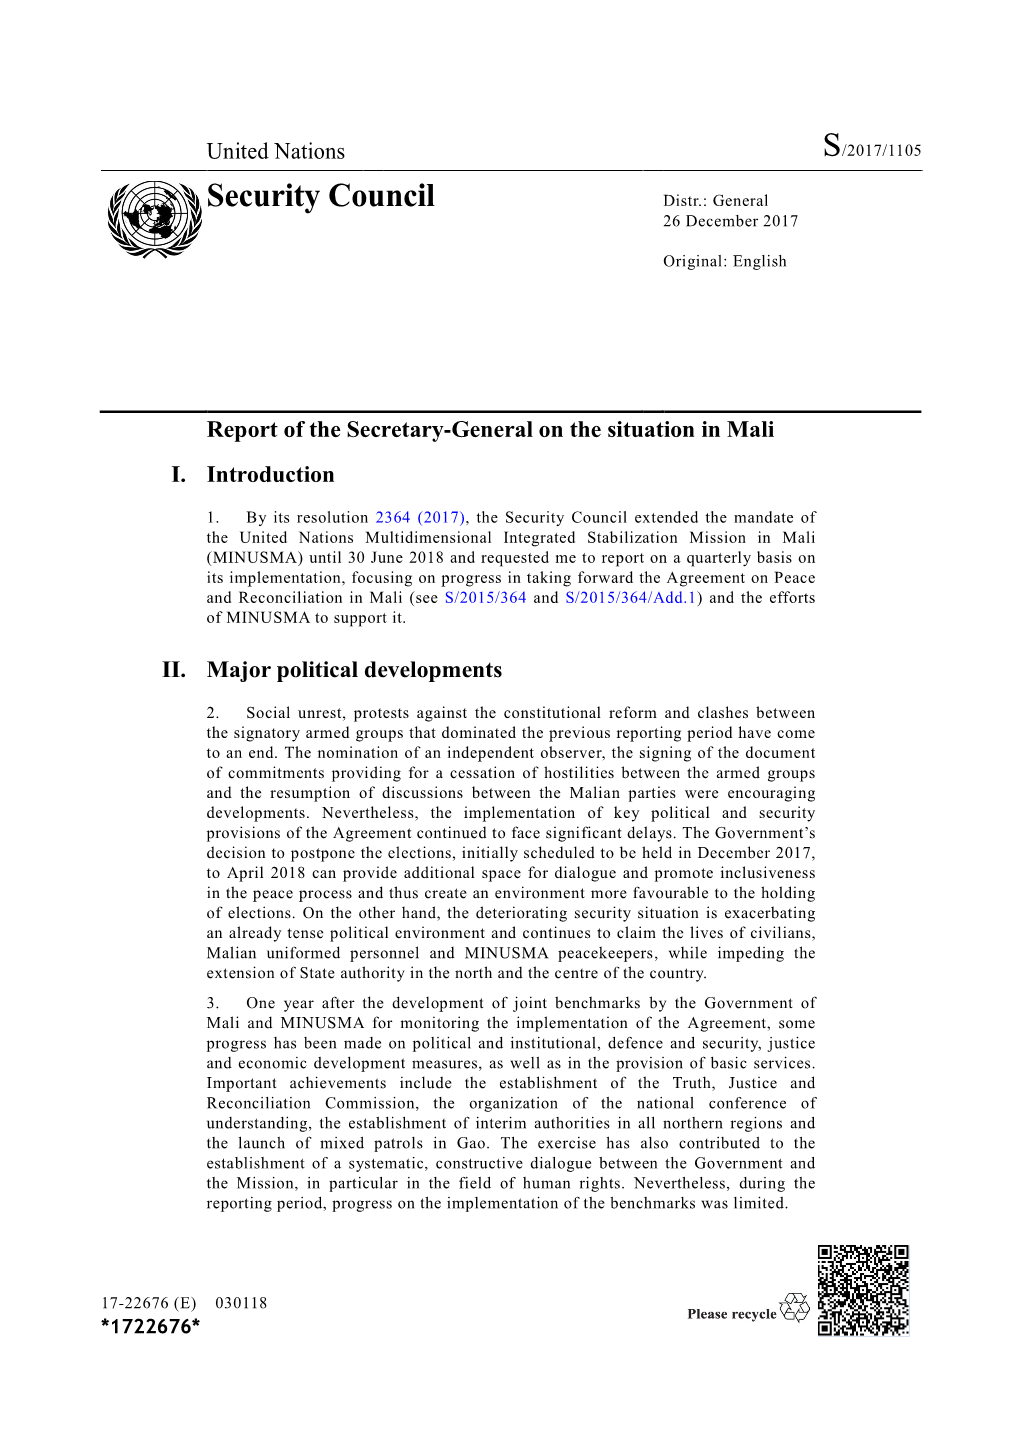 Security Council Distr.: General 26 December 2017